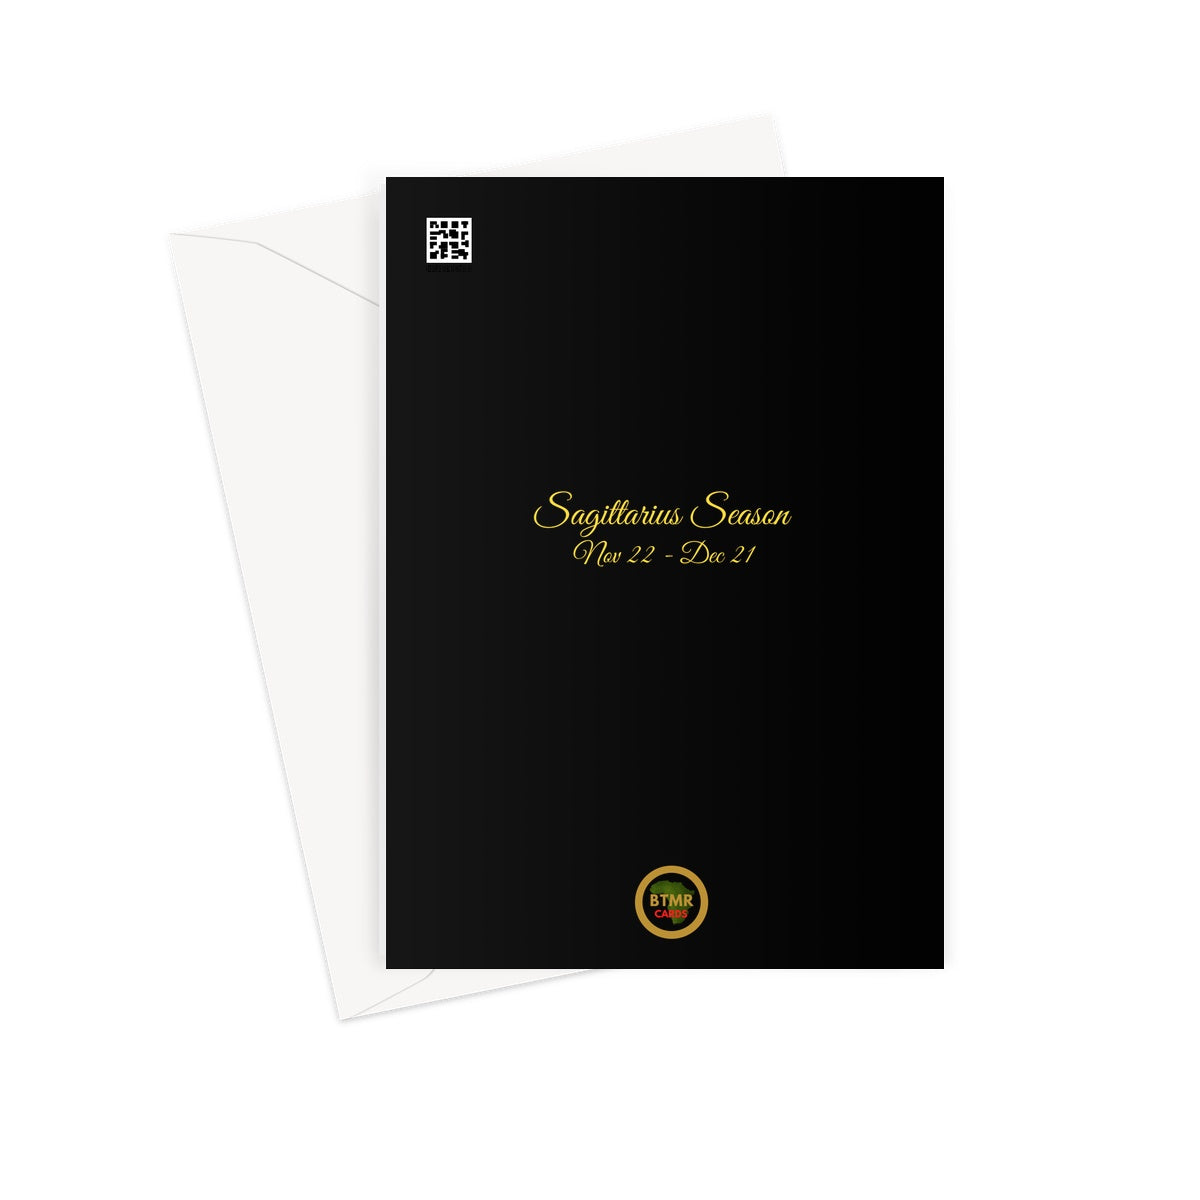 Sagittarius Birthday Card - Liquid Gold